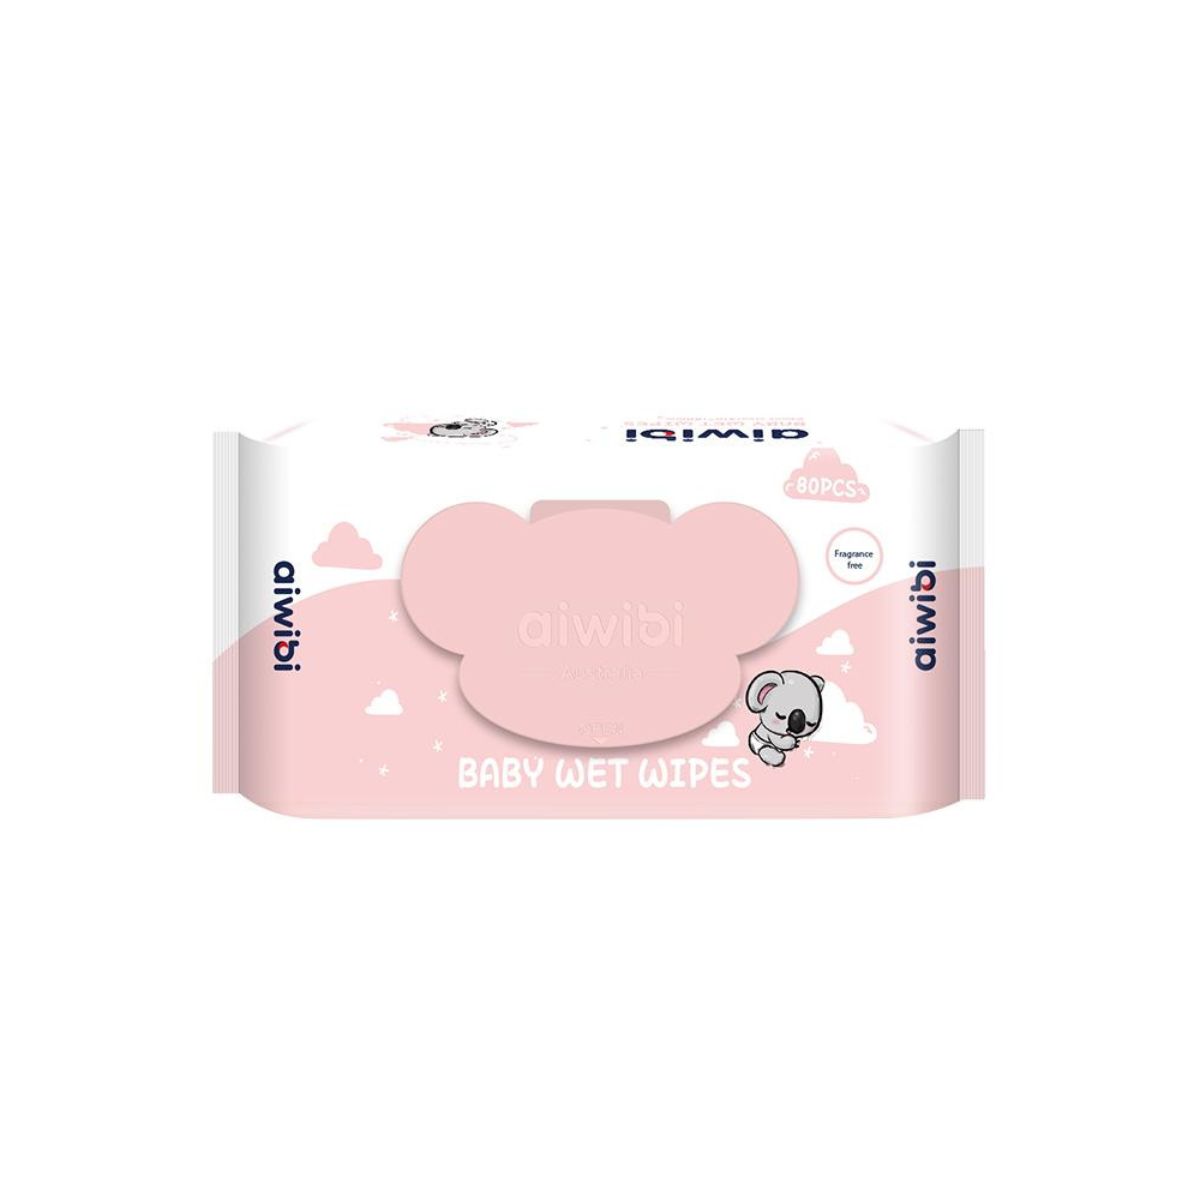 Aiwibi 100% Skin-friendly Baby Wet Wipes - 80 Pcs - Pink